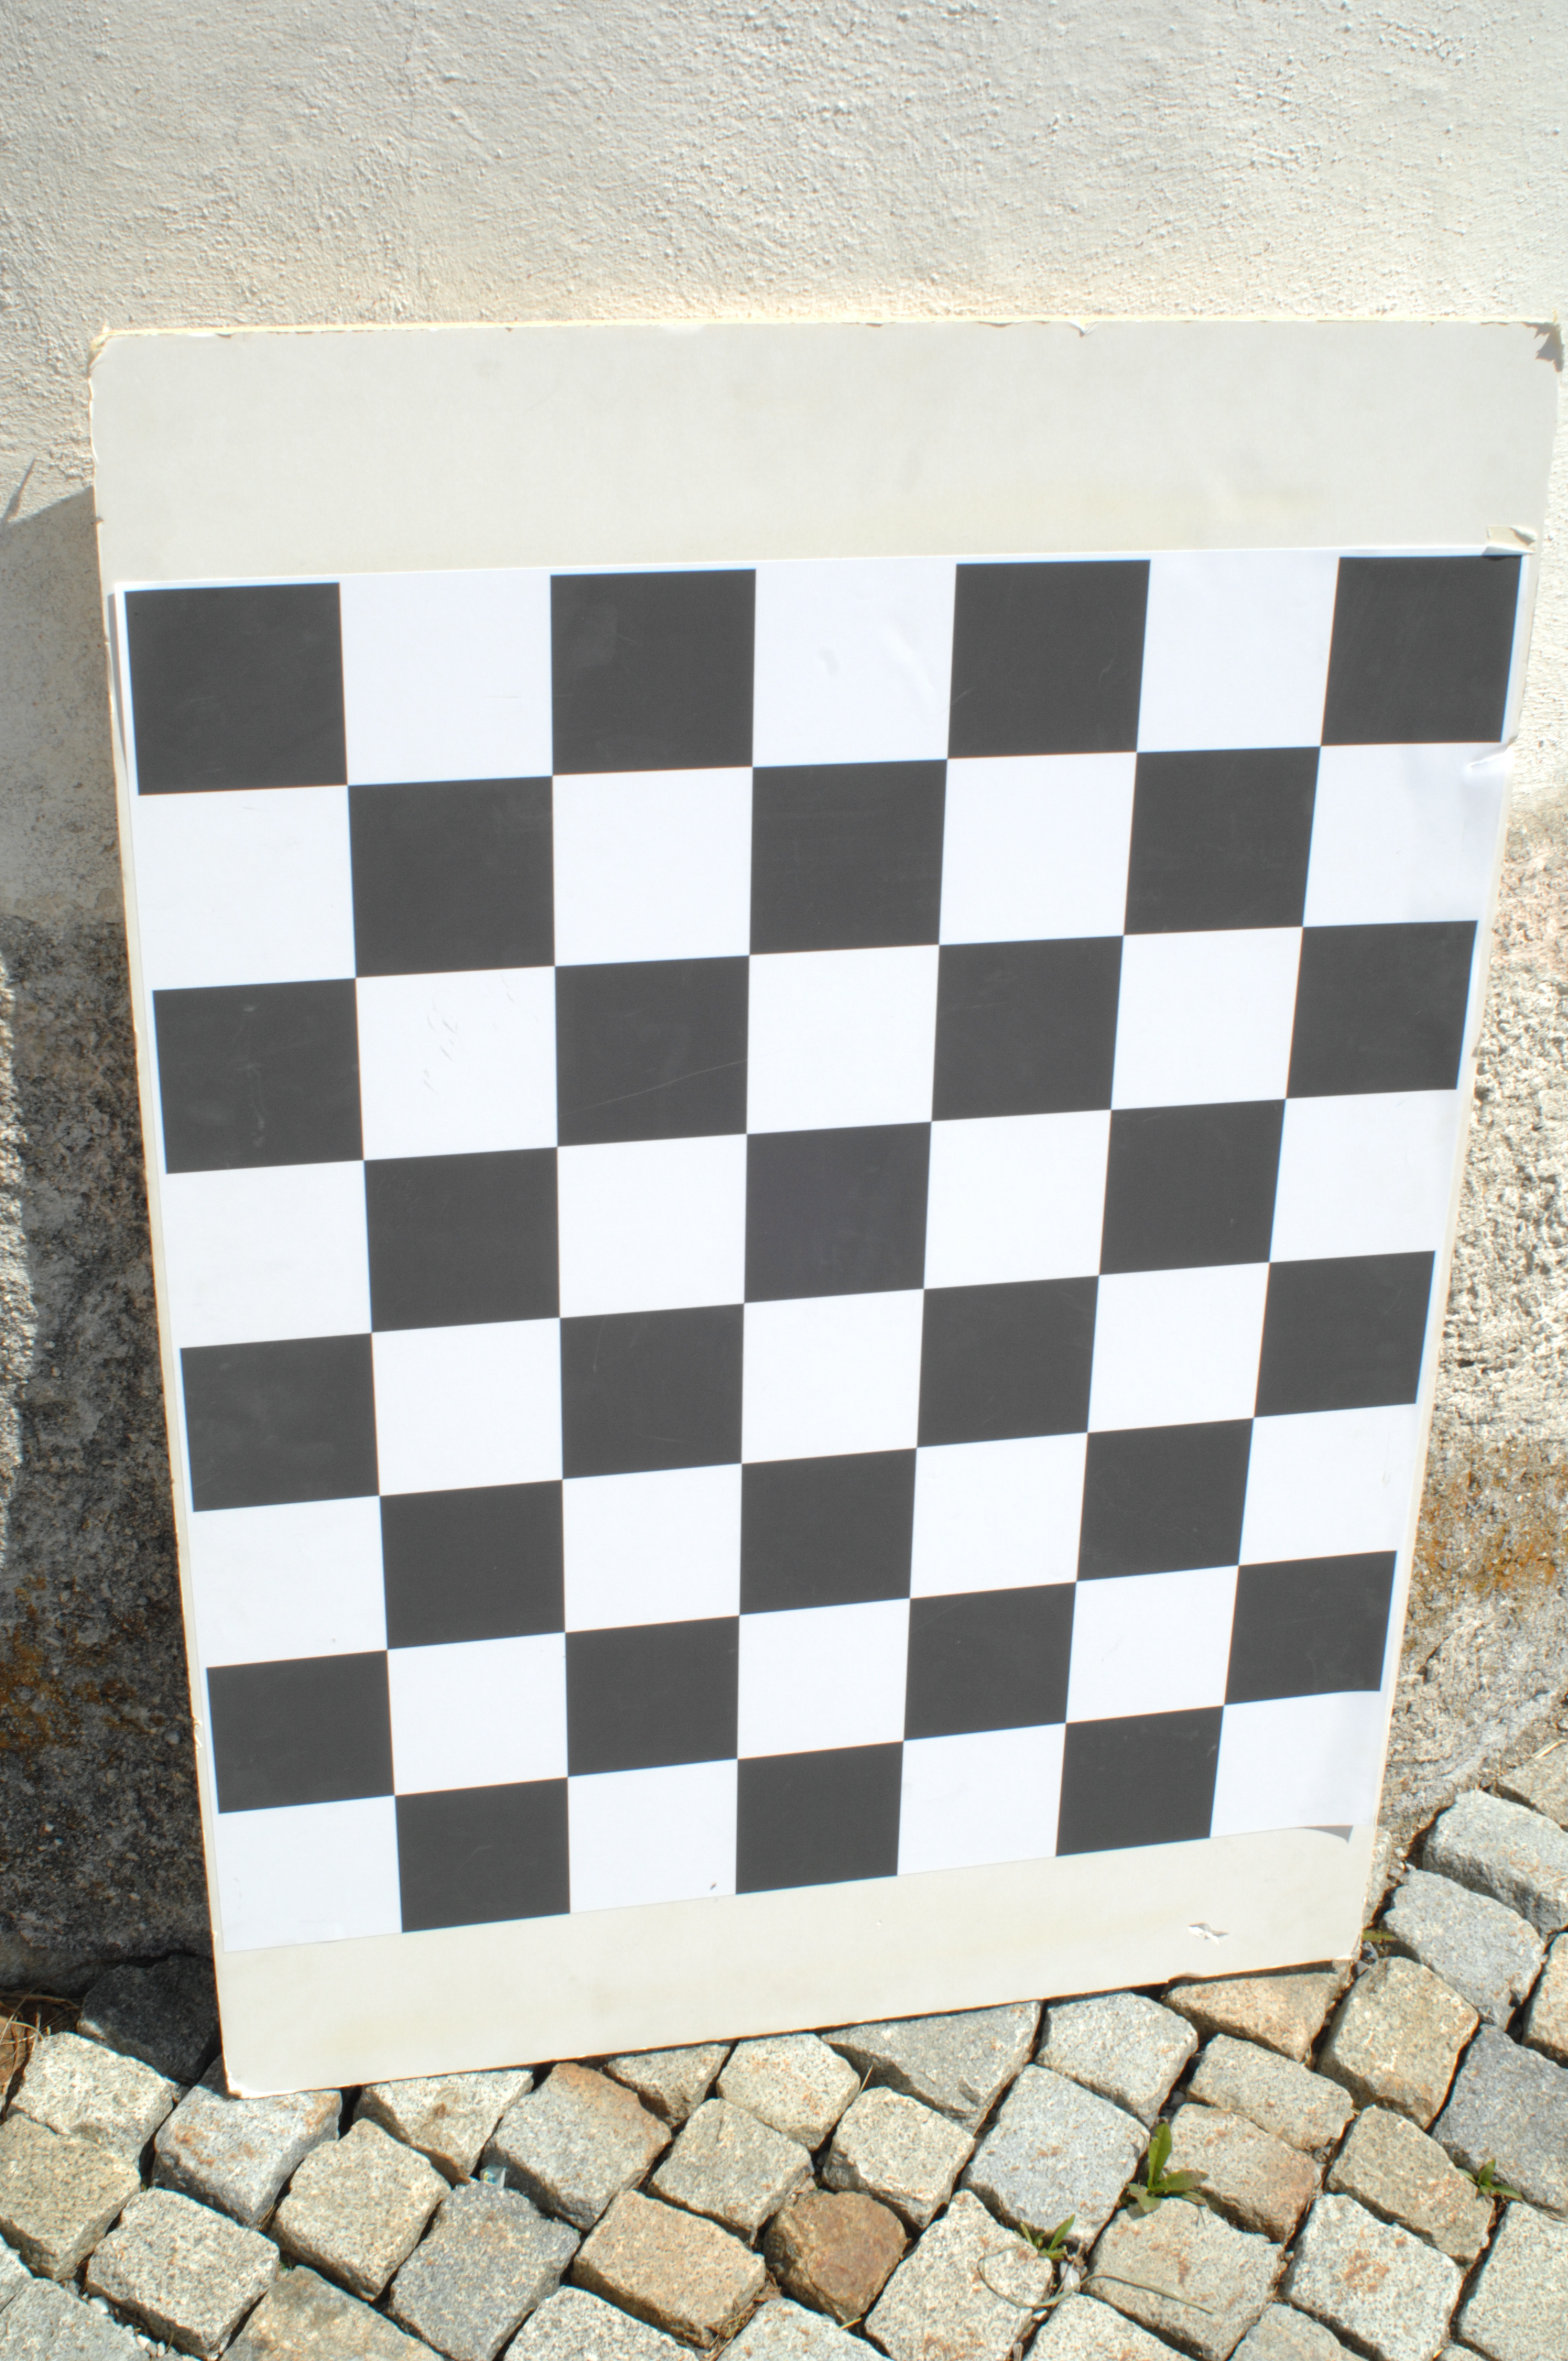 Sample chessboard image